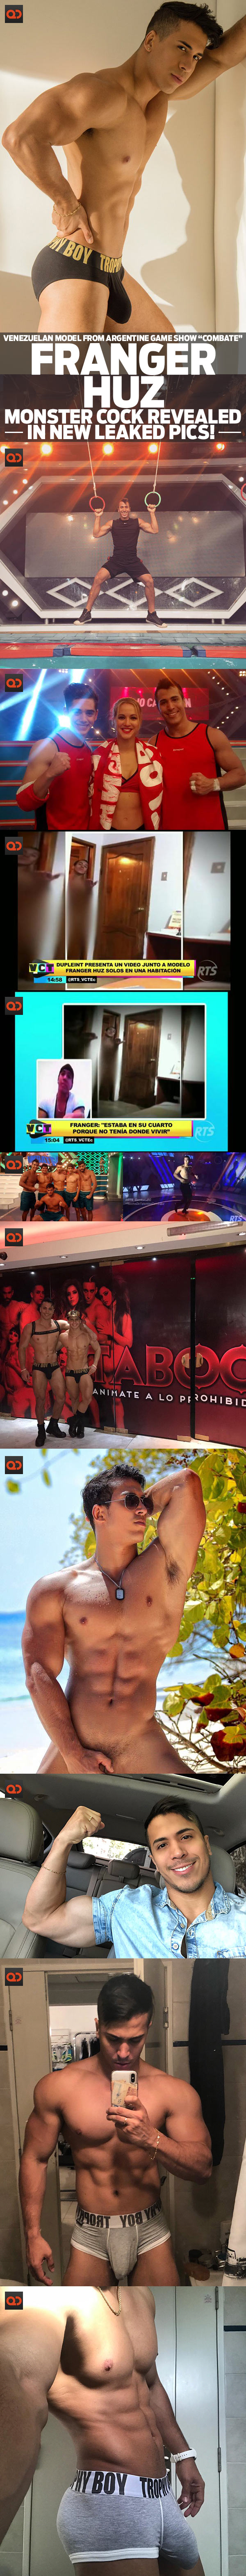 Franger Huz, Venezuelan Model From Argentine Game Show “Combate”, Monster Cock Revealed In New Leaked Pics!